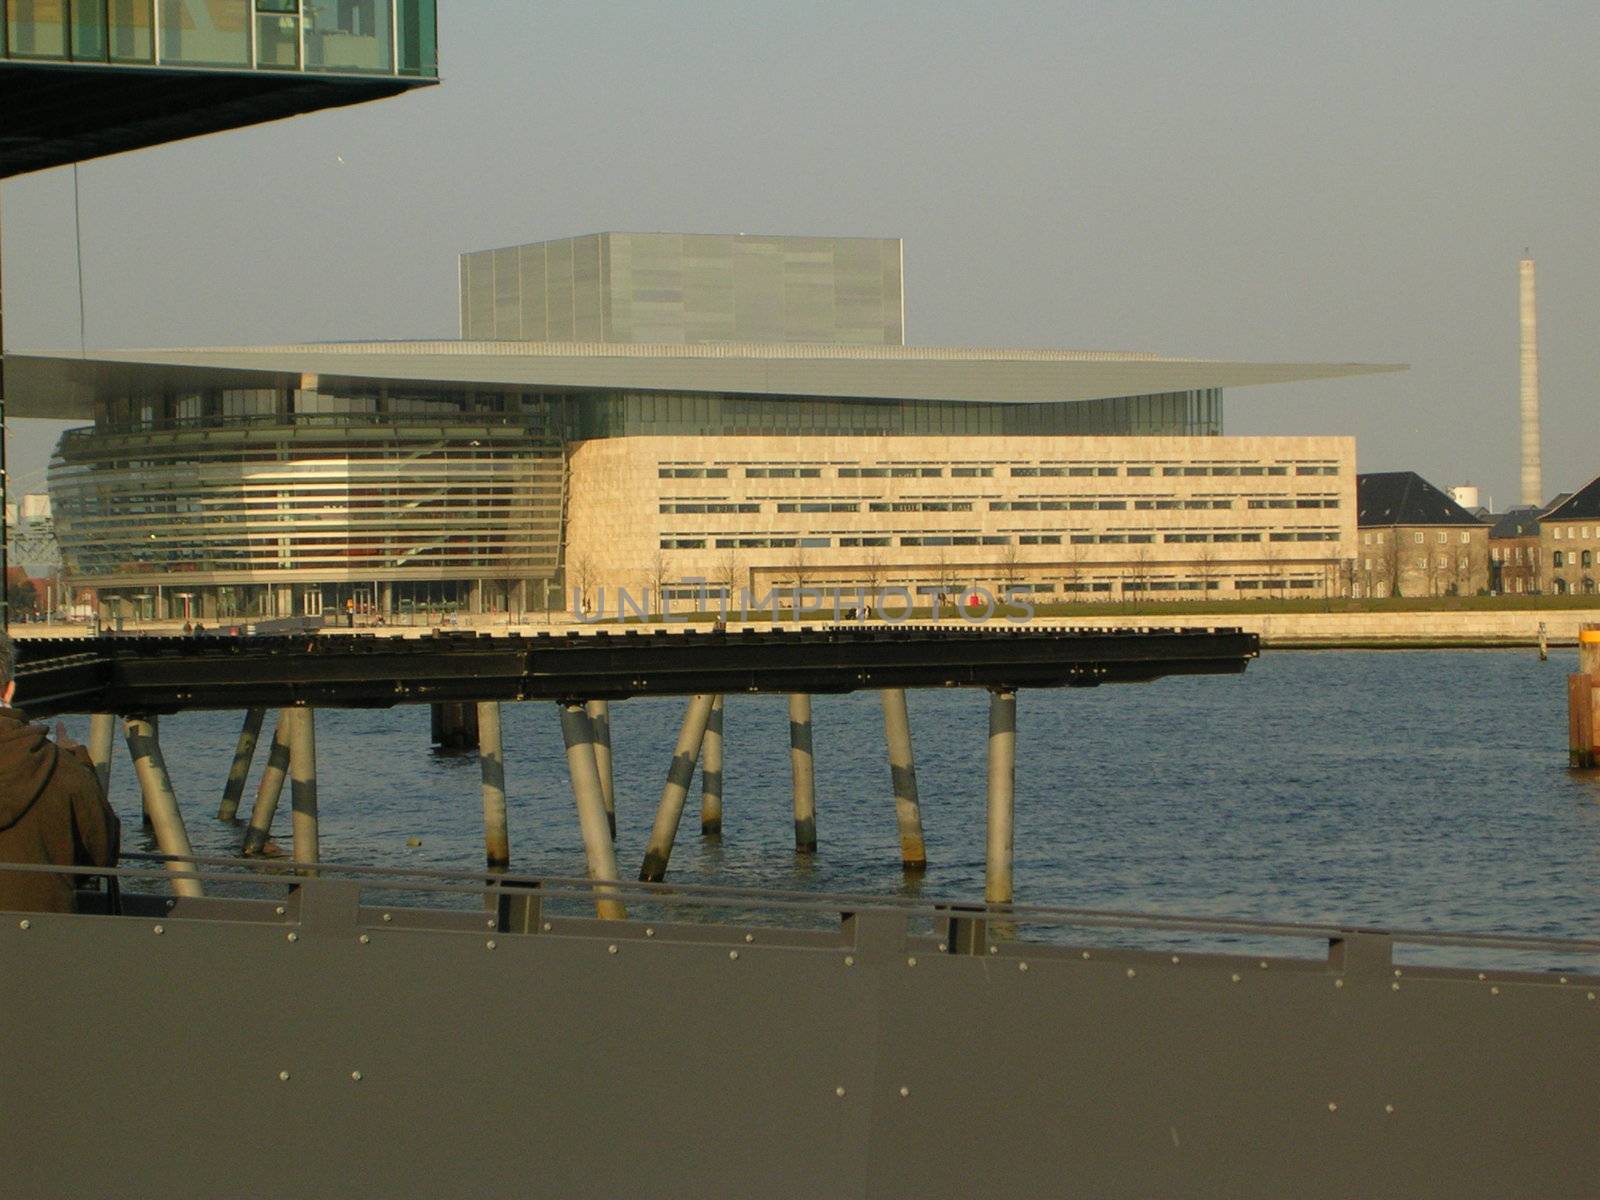 Copenhagen Opera House by photo4dreams